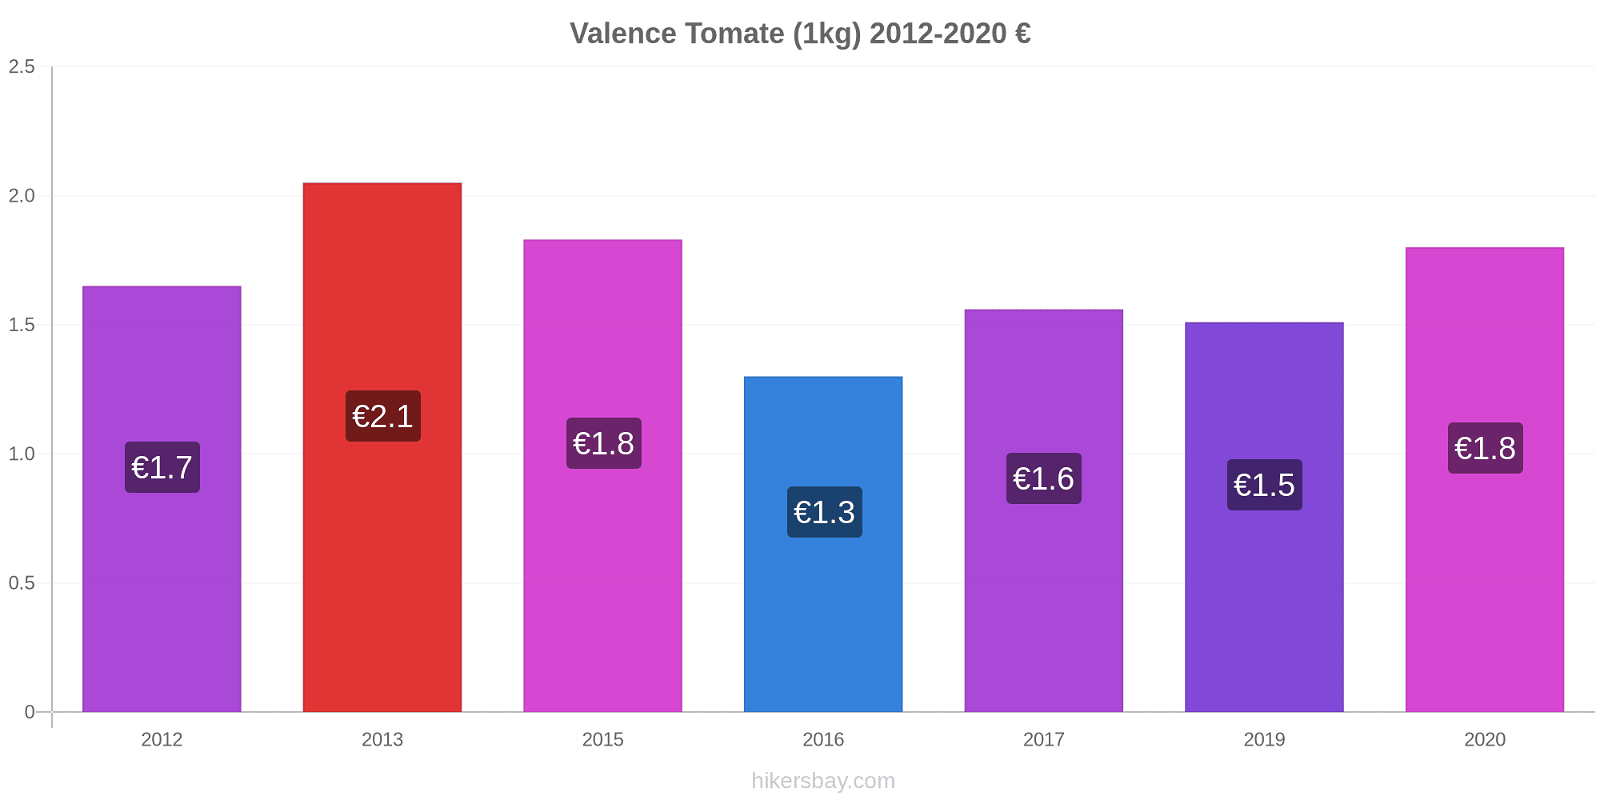 Valence changements de prix Tomate (1kg) hikersbay.com